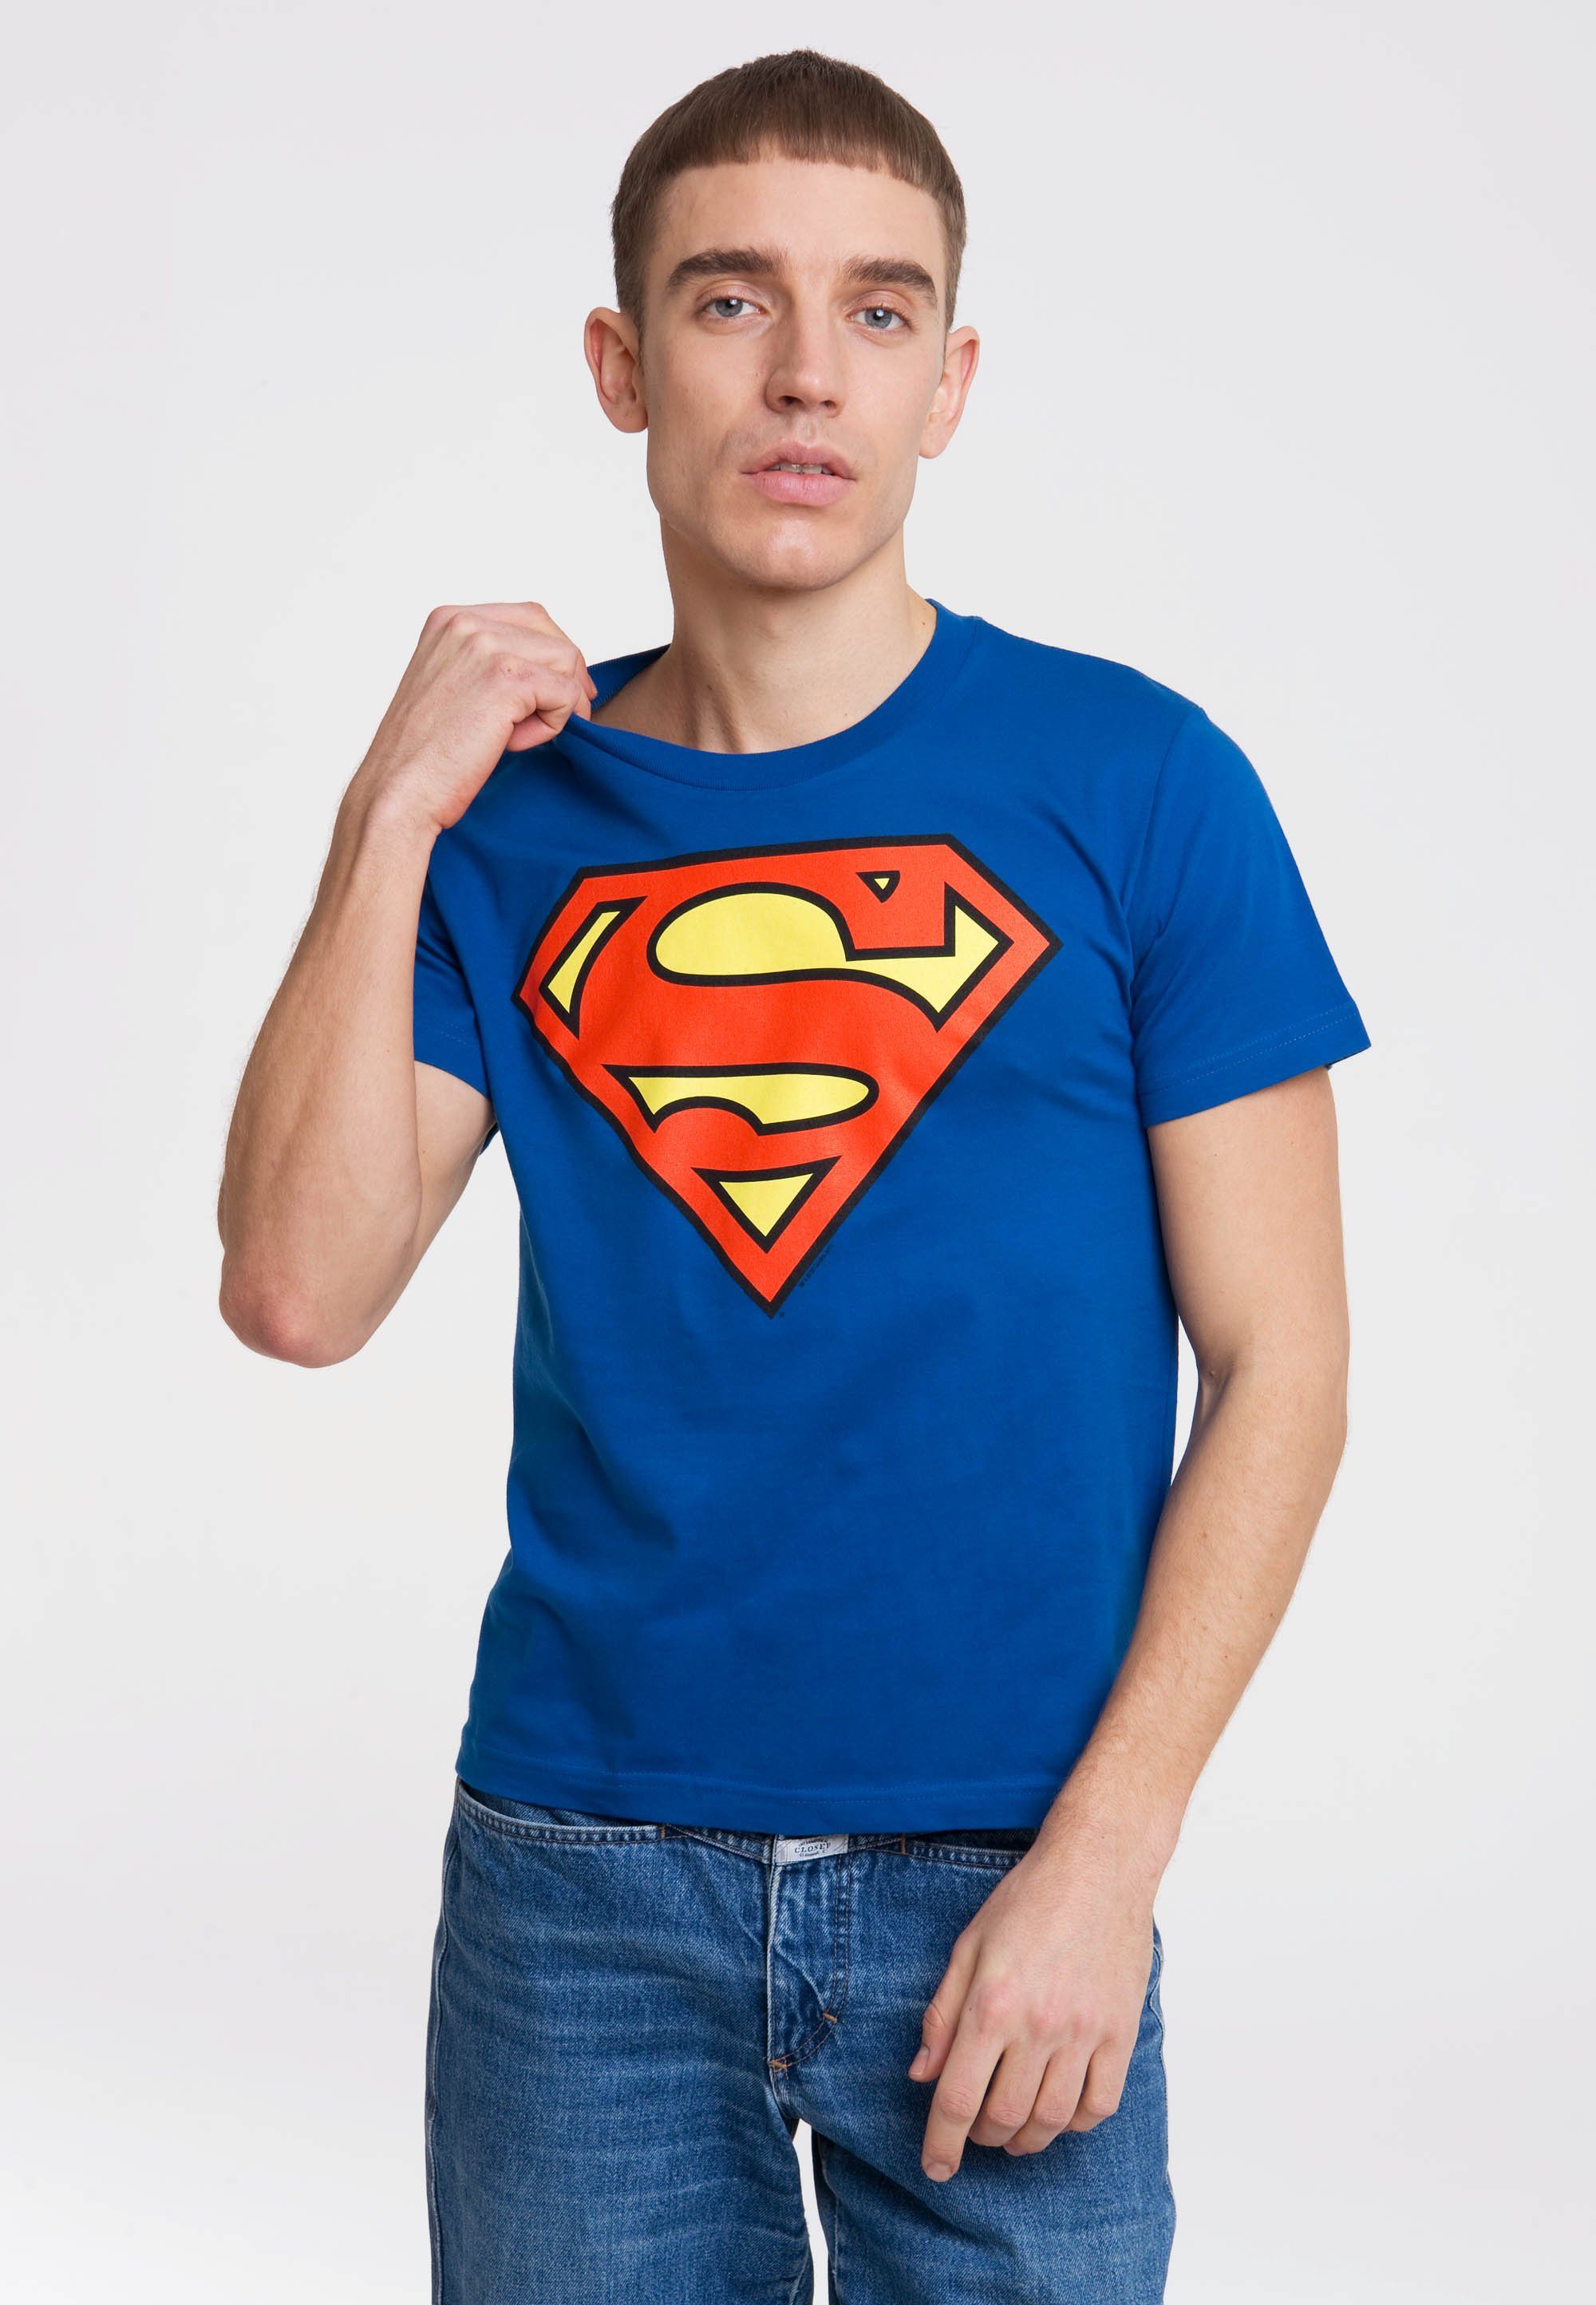 LOGOSHIRT T-Shirt SUPERMAN - LOGO Rundhals-Ausschnitt Frontprint, Klassischer Passform für coolem mit optimale